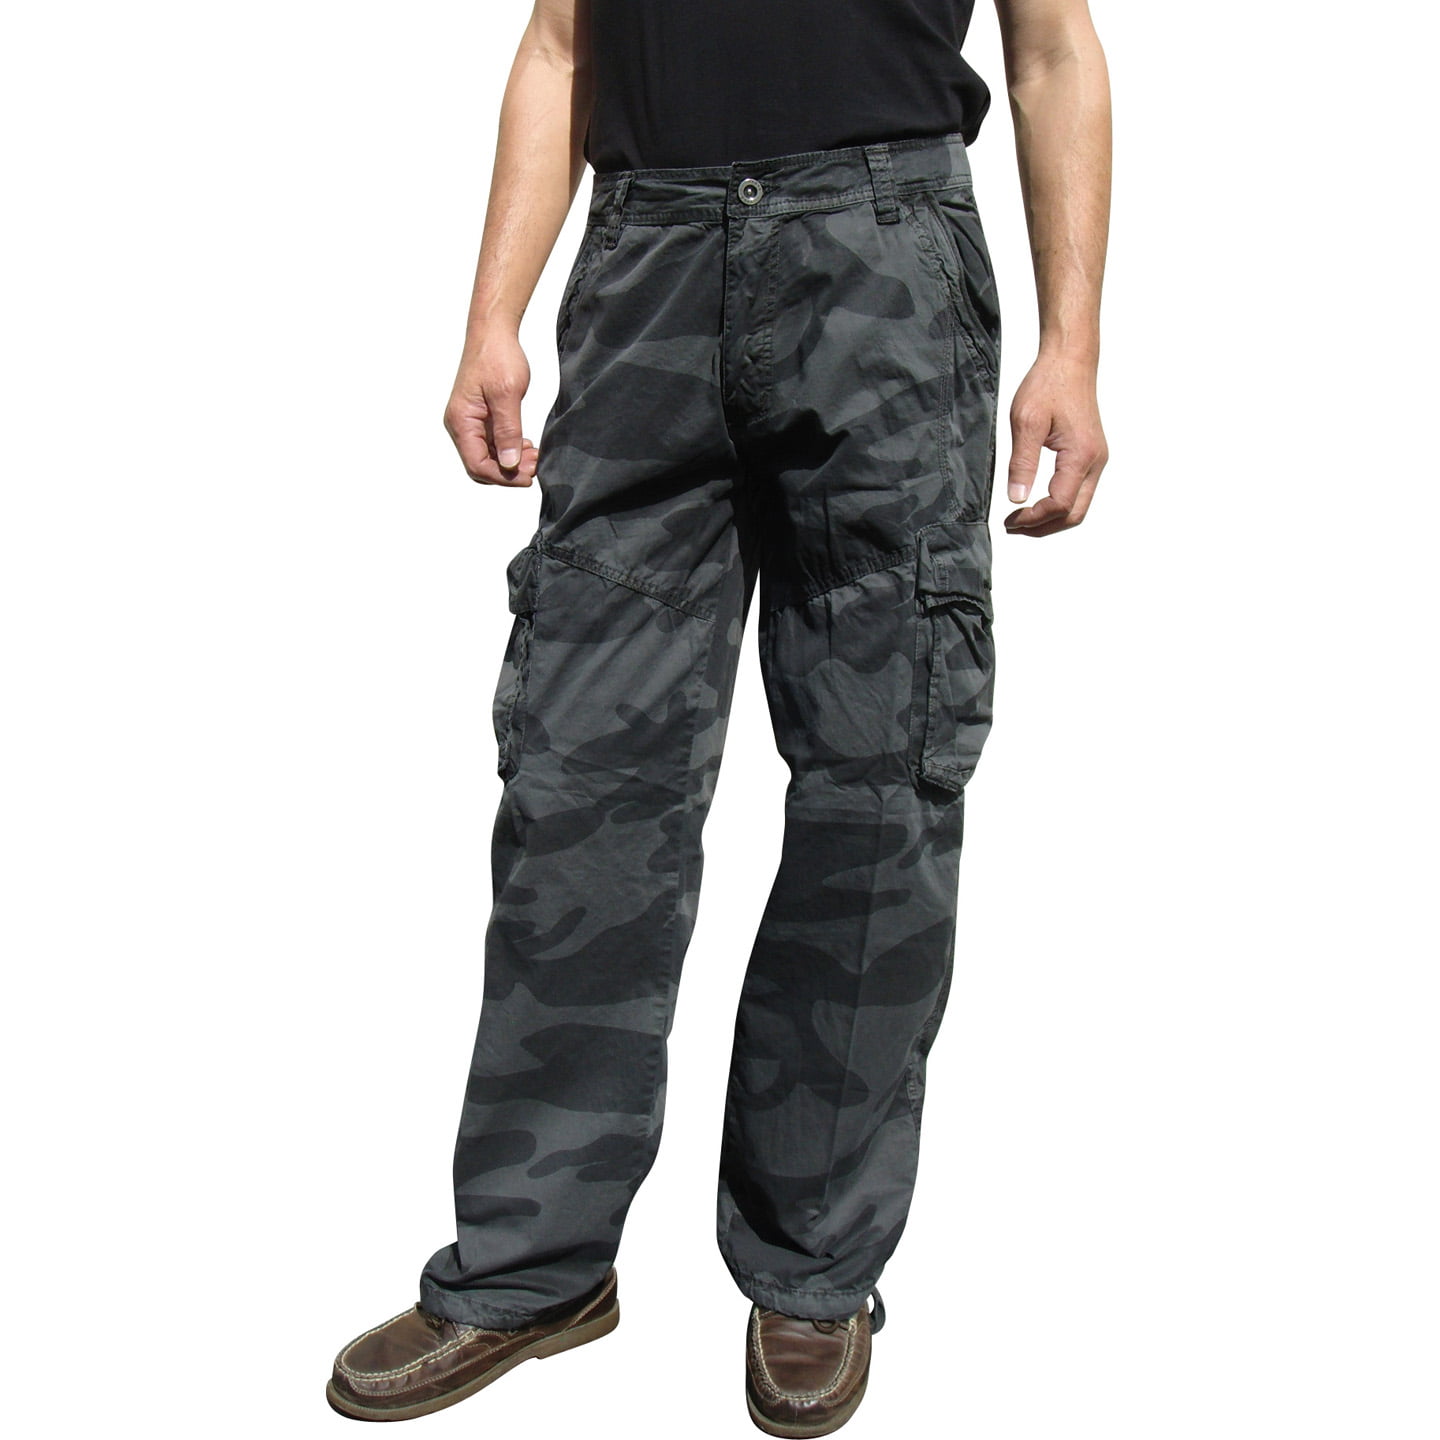 Mens Military-Style Camoflage Cargo Pants #27C1 40x32 D.Grey - Walmart.com